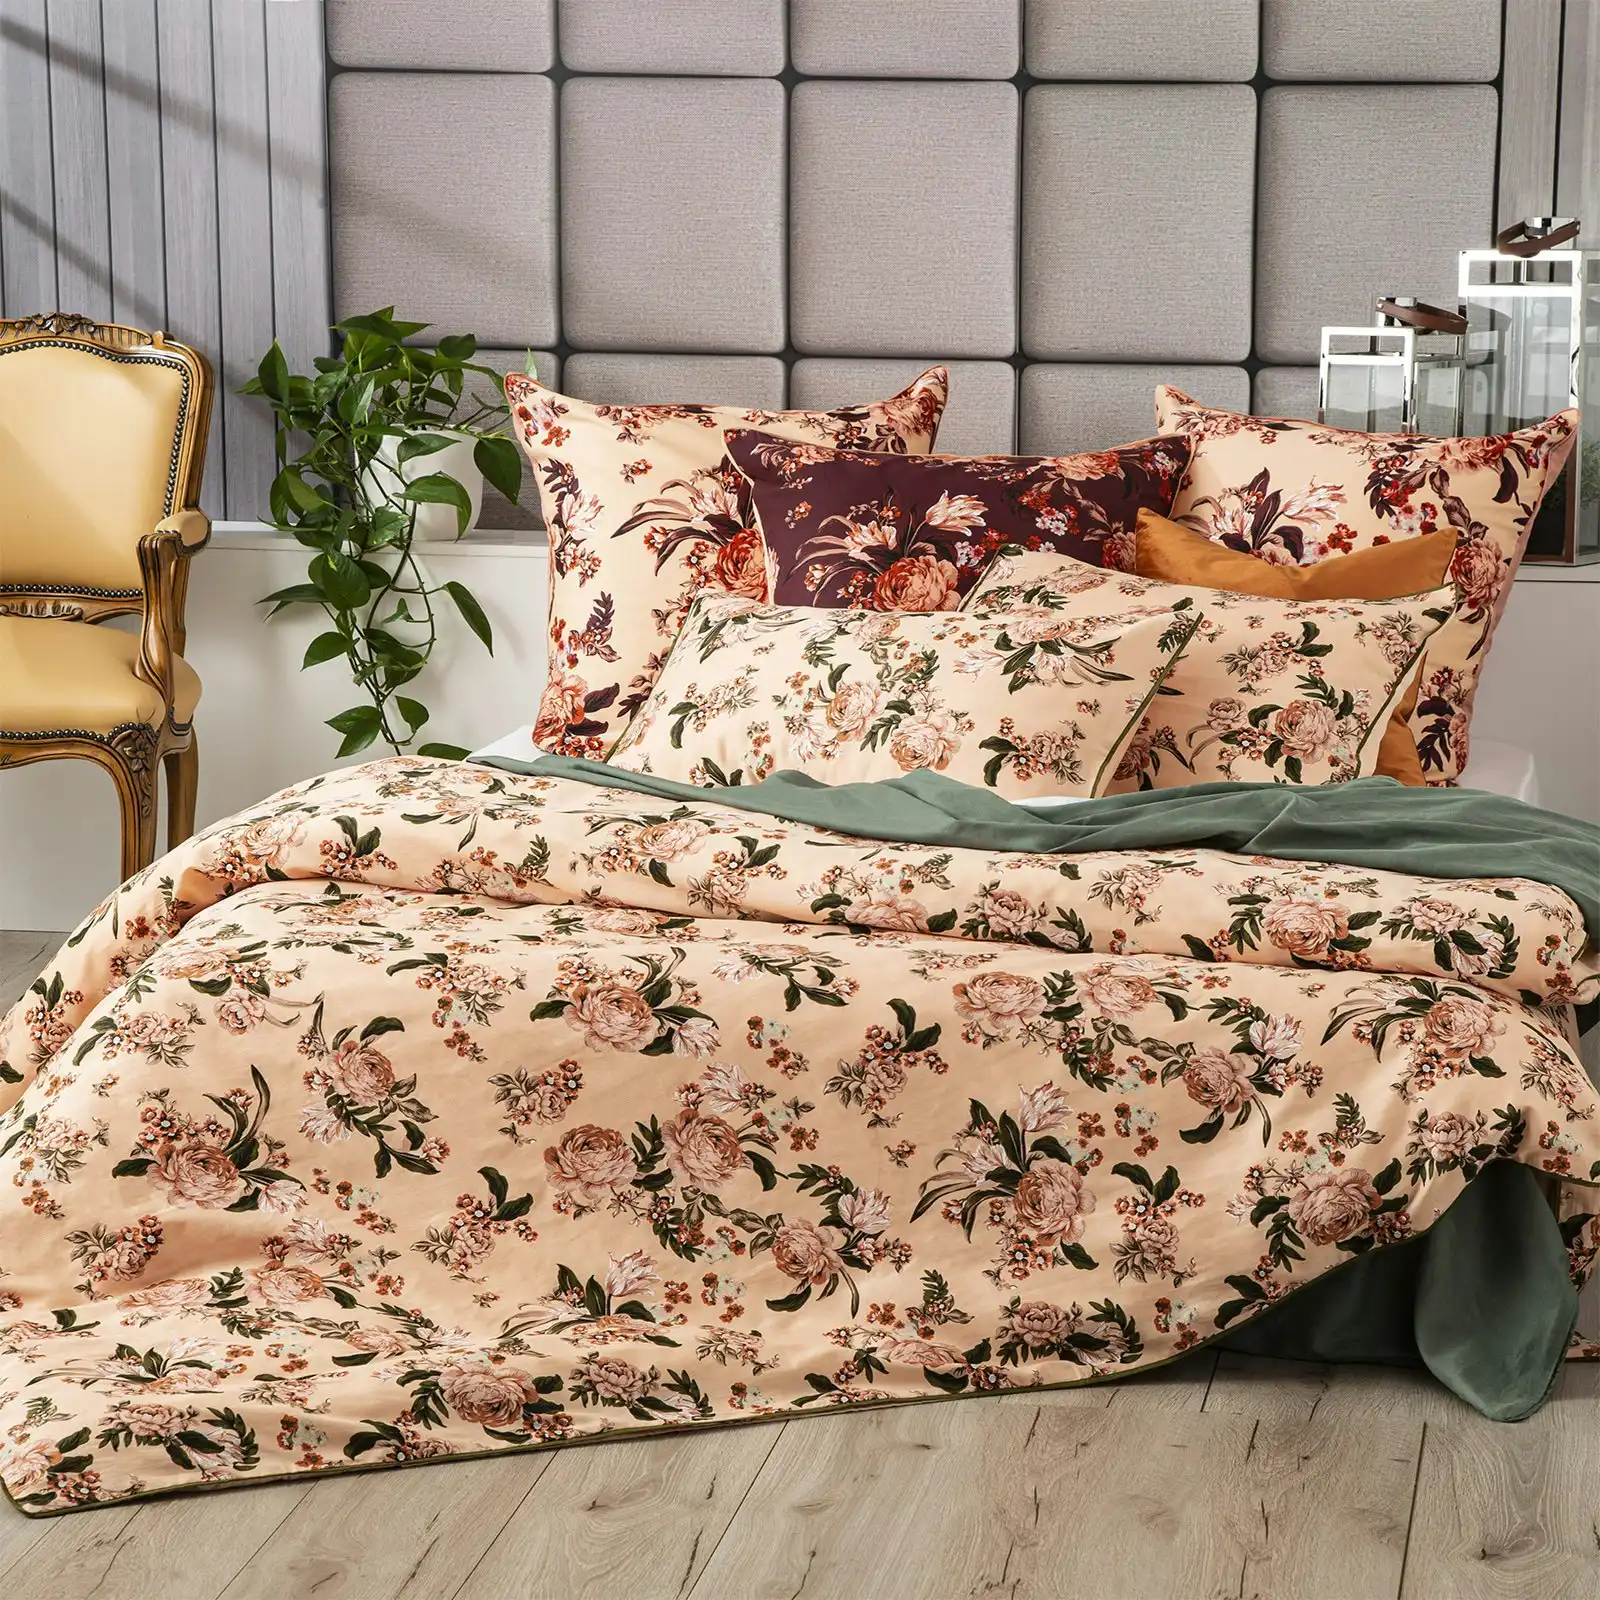 Renee Taylor Queen Bed Quilt Cover 300TC Cotton Set/2x Pillowcases Secret Garden